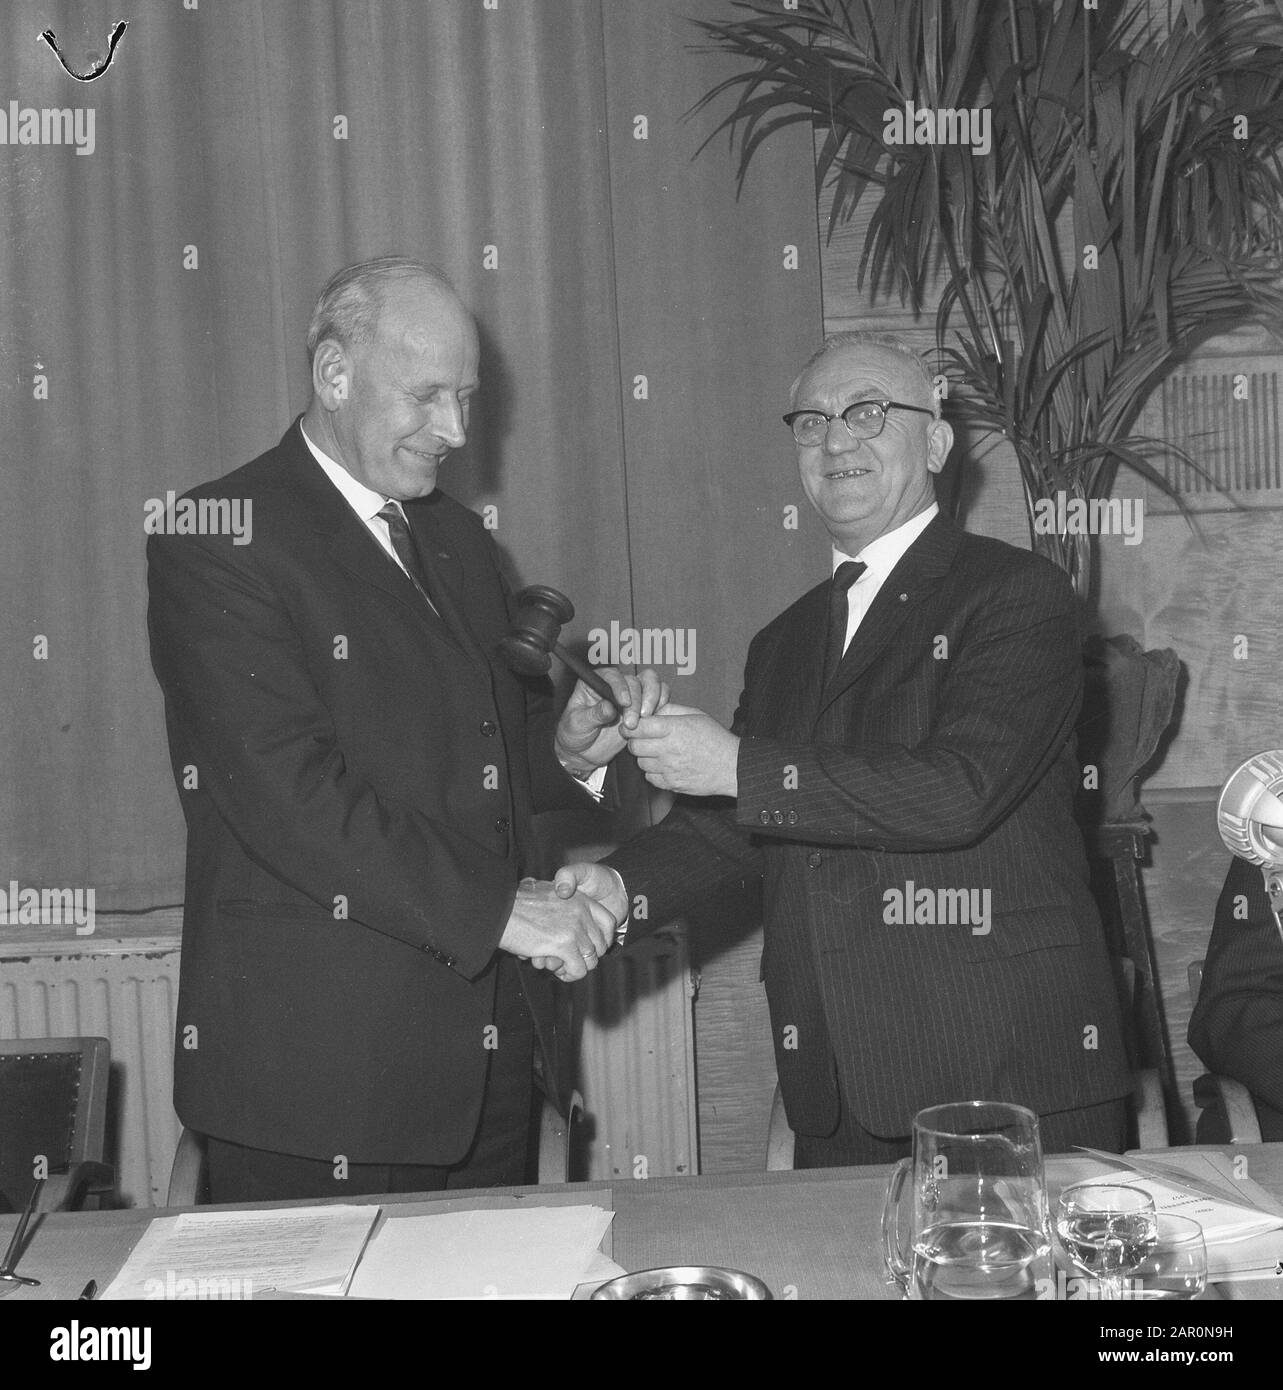 New president CNV J. van Eibergen (left) gets the gavel handed over by former president C. van Mastrigt Date: March 24, 1964 Keywords: trade unions, chairmen Personal name: Eibergen, J. van, Mastrigt, C.J. of Institution name: CNV Stock Photo